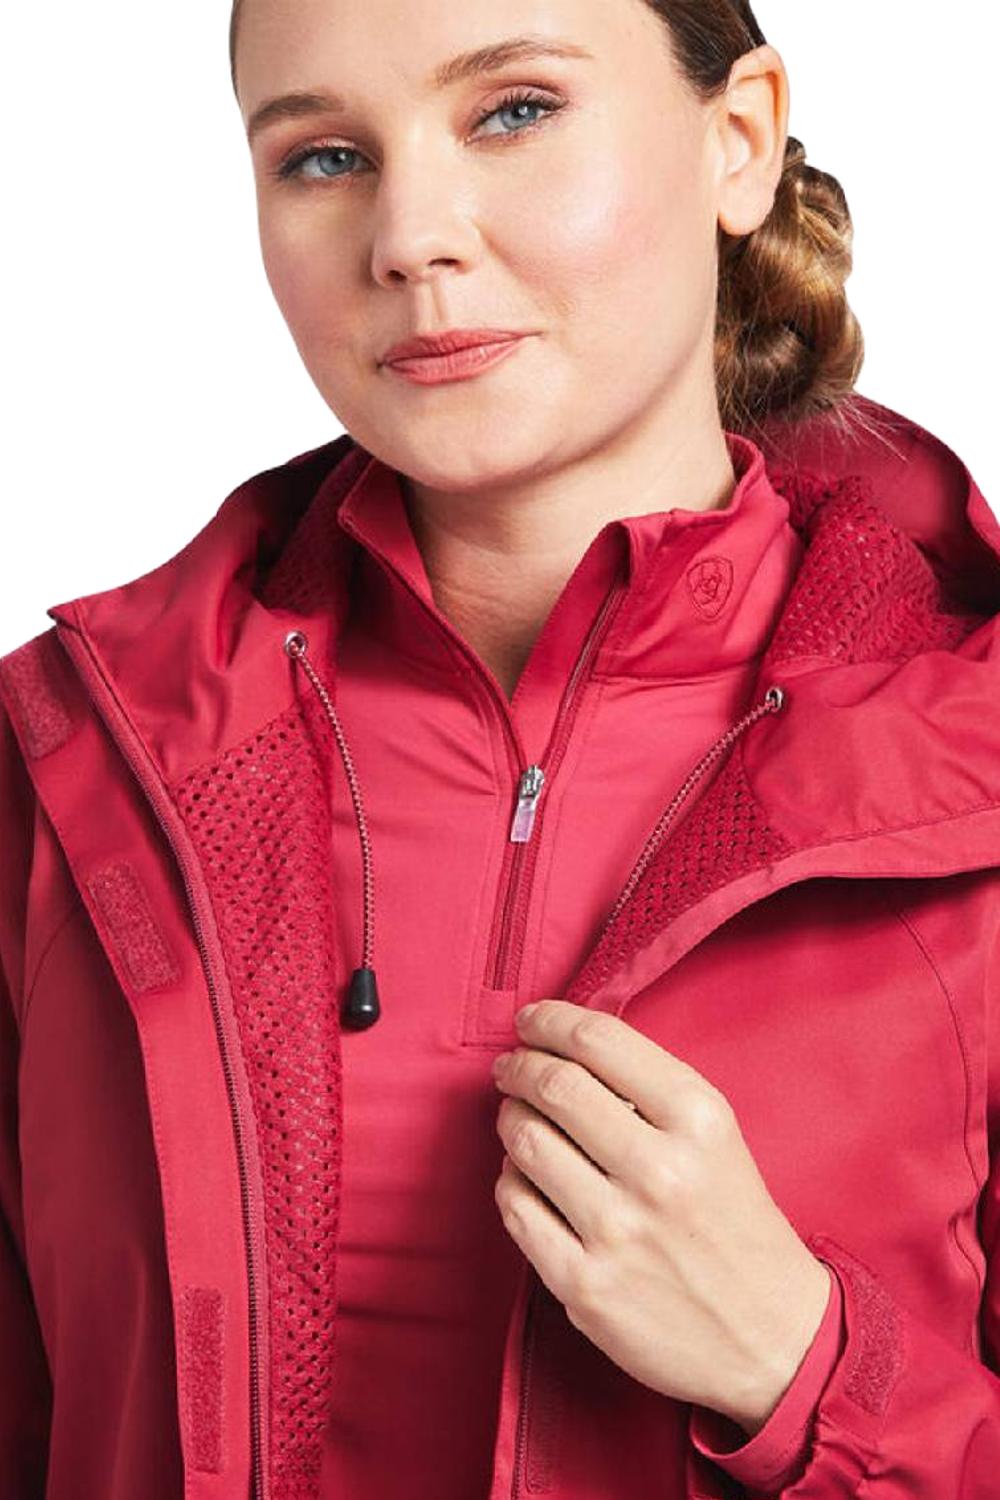 Ariat Womens Spectator Waterproof Jacket In Red Bud 